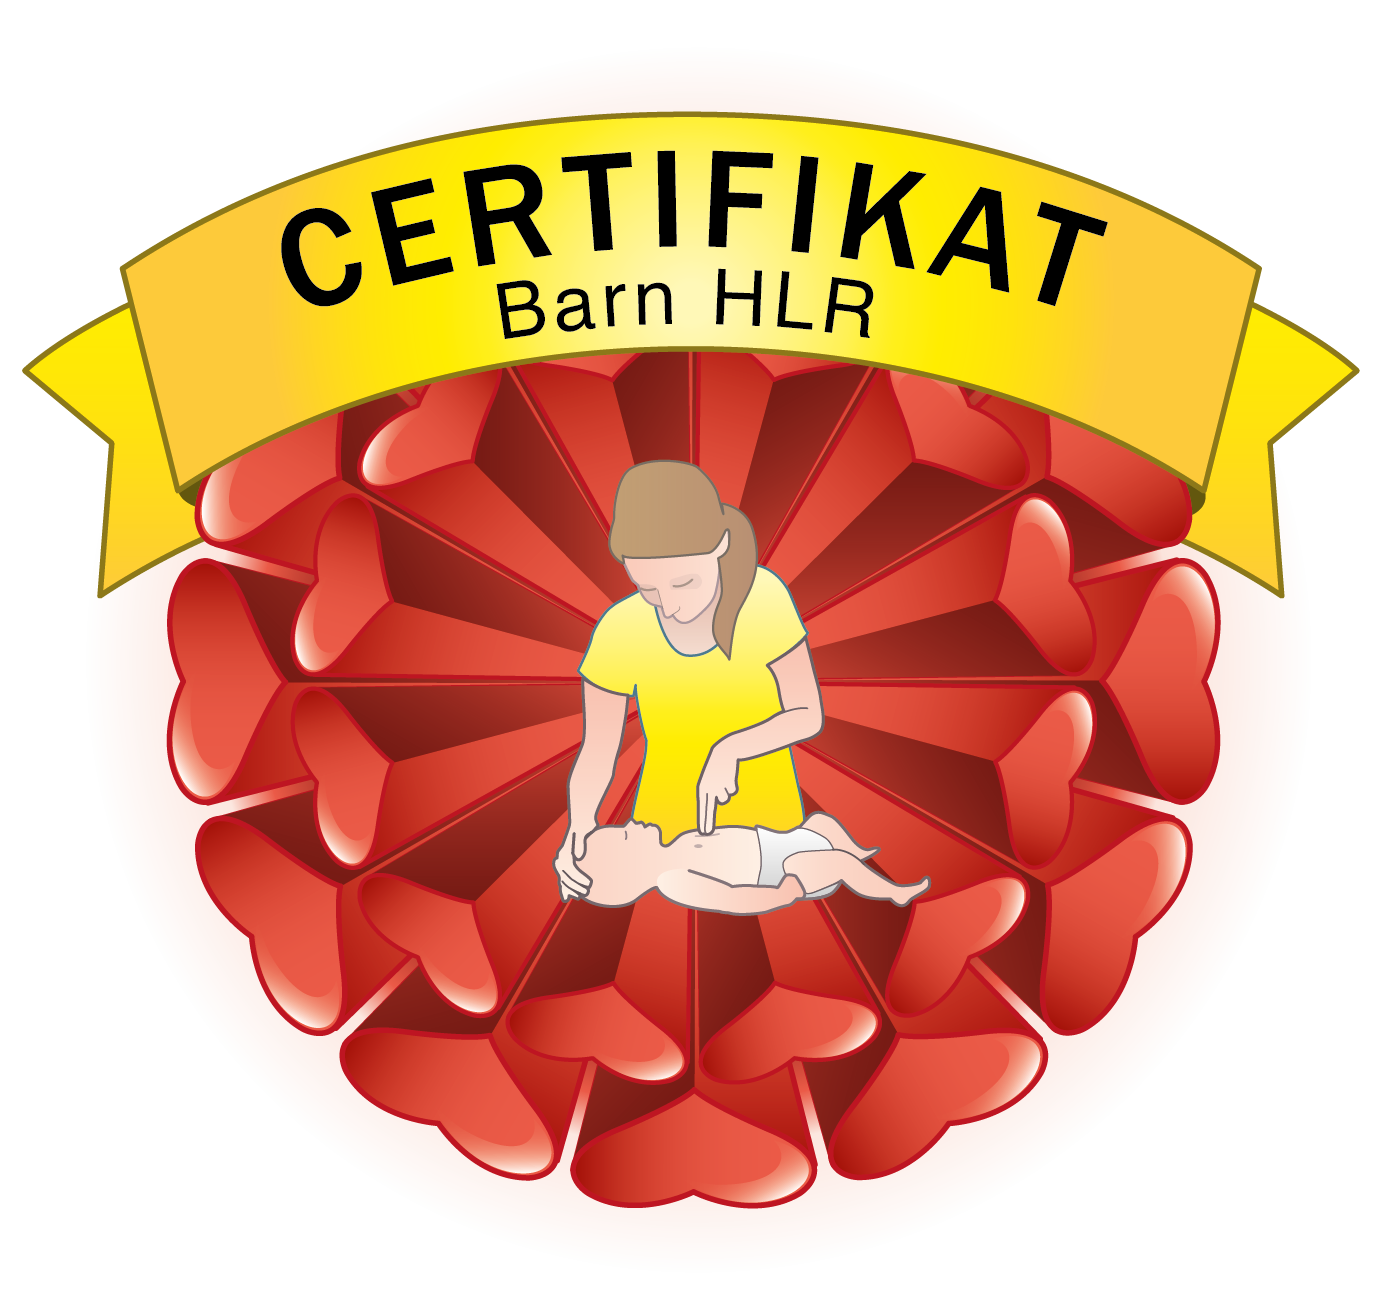 Certifikat - Barn HLR